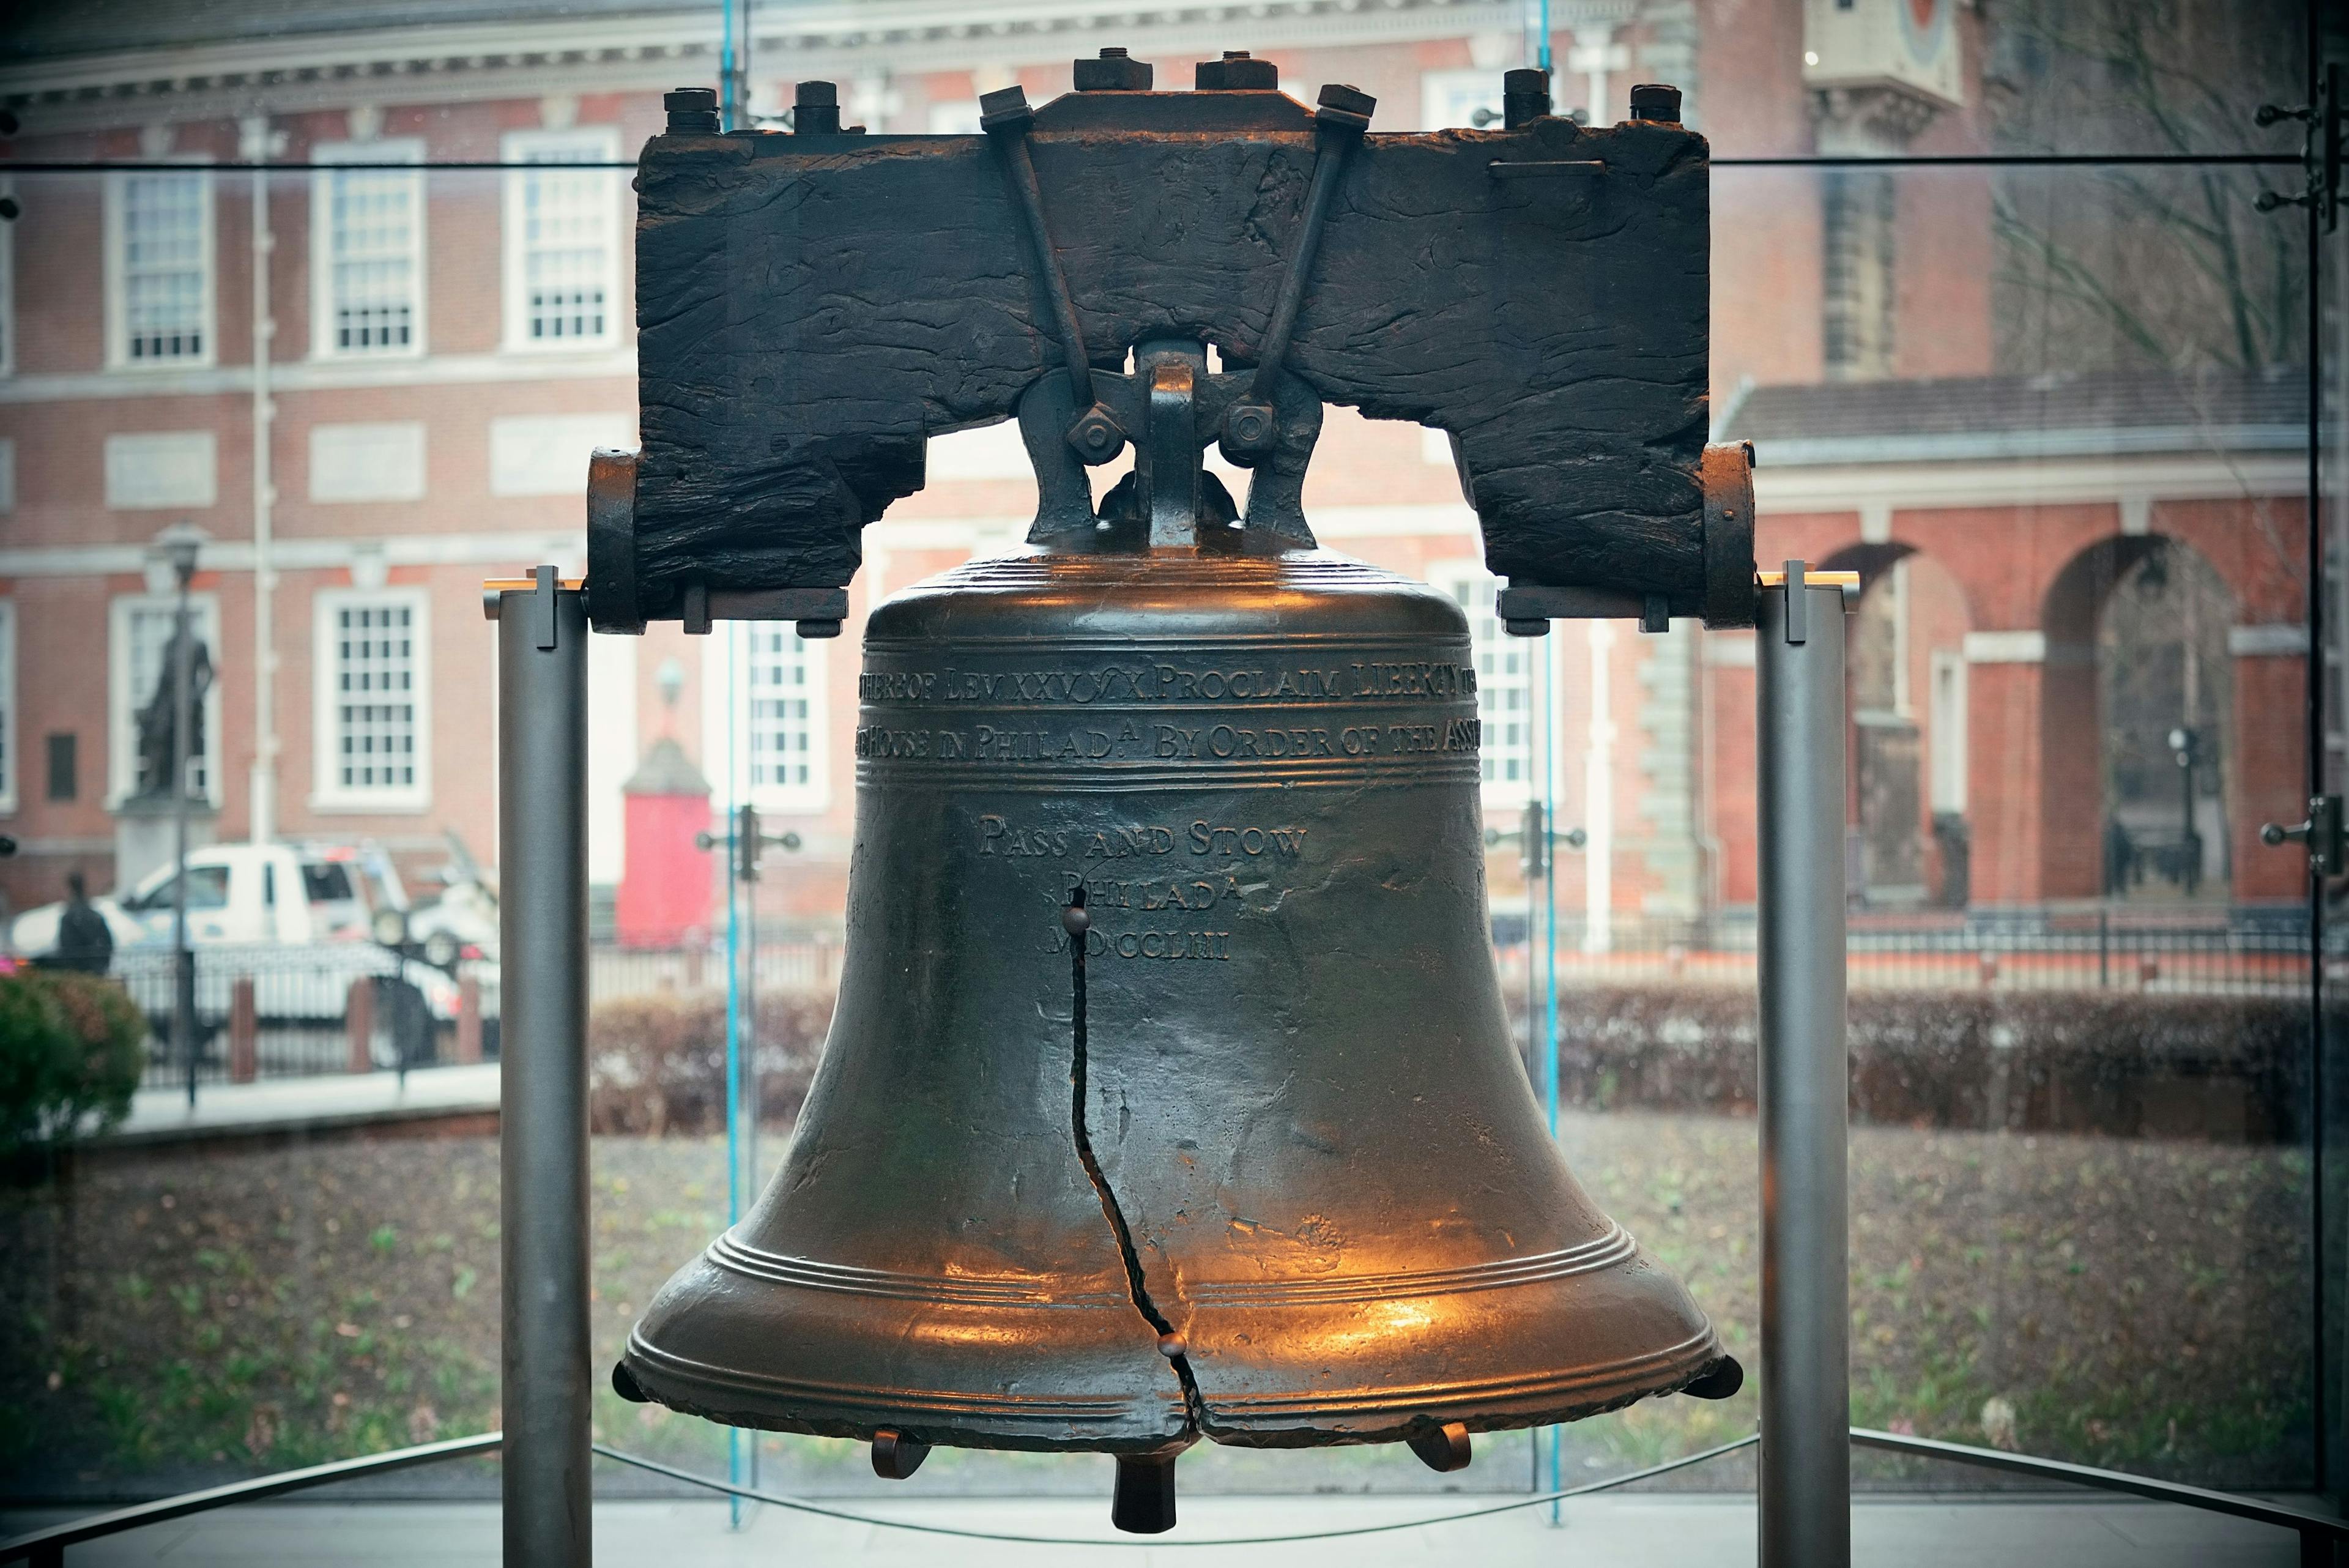 Liberty Bell | Image Credit: © rabbit75_fot - stock.adobe.com